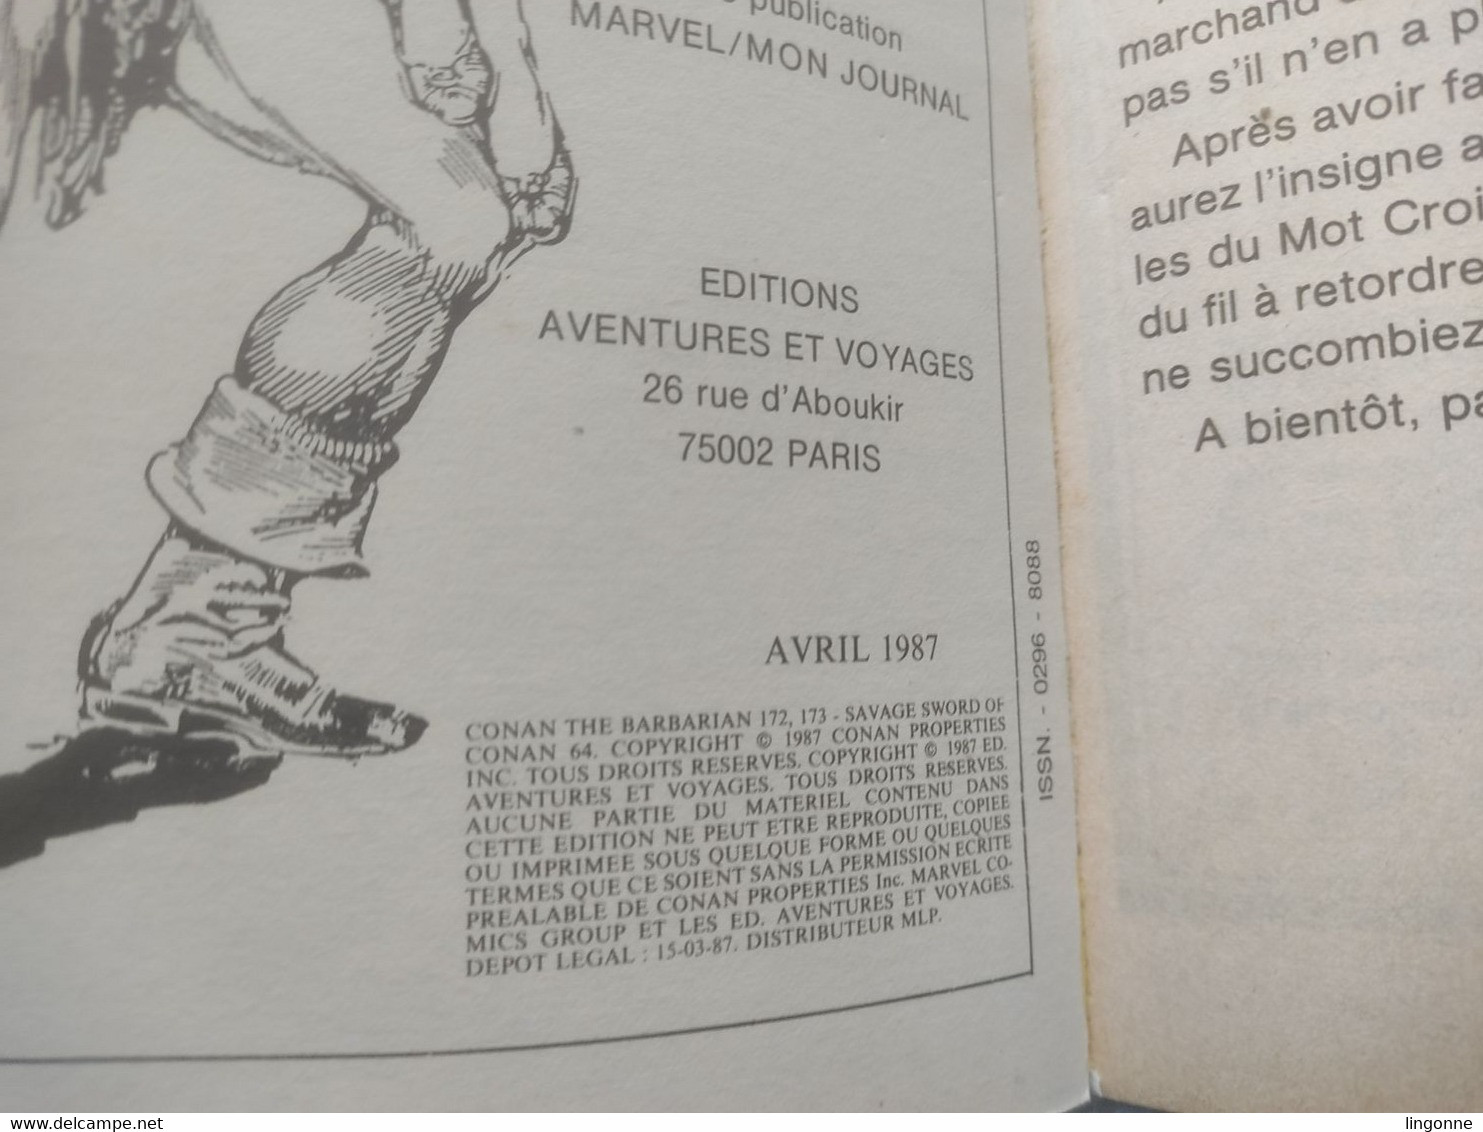 1987 Super CONAN N°19 Mensuel " Les Enfants De Rhan " Mon Journal - Conan